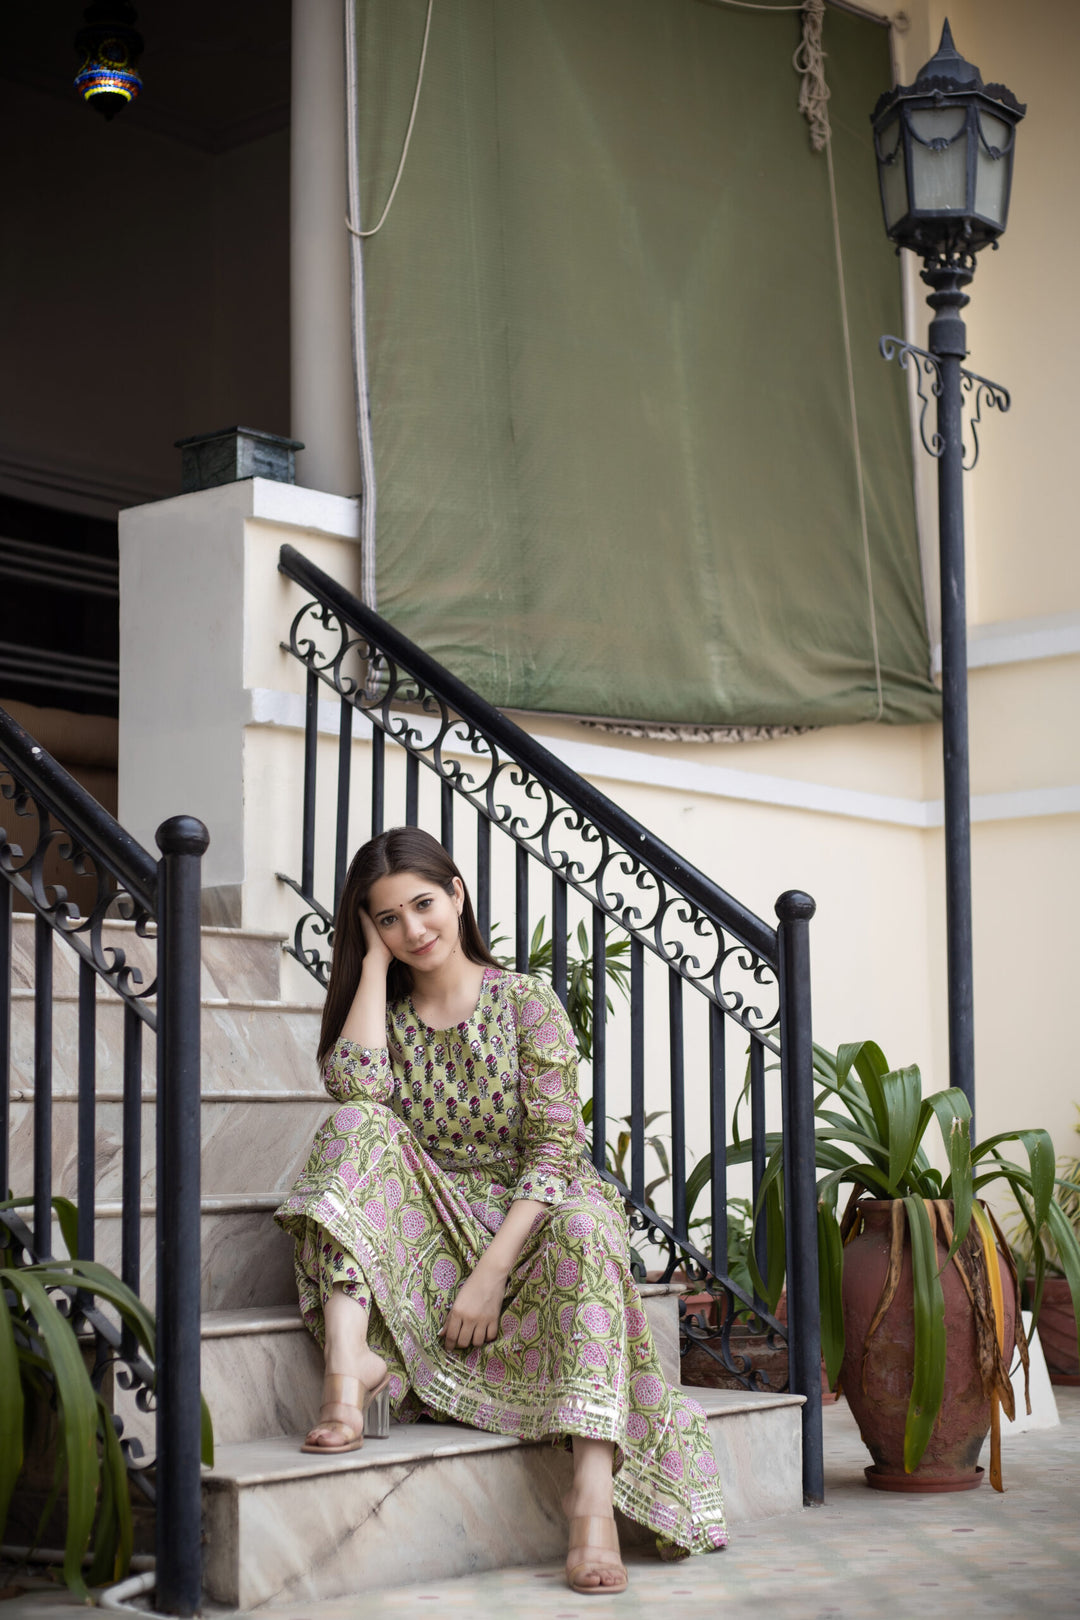 Buy Green Kurta and Pant | Best Traditional Long Dress for Women | Kaajh